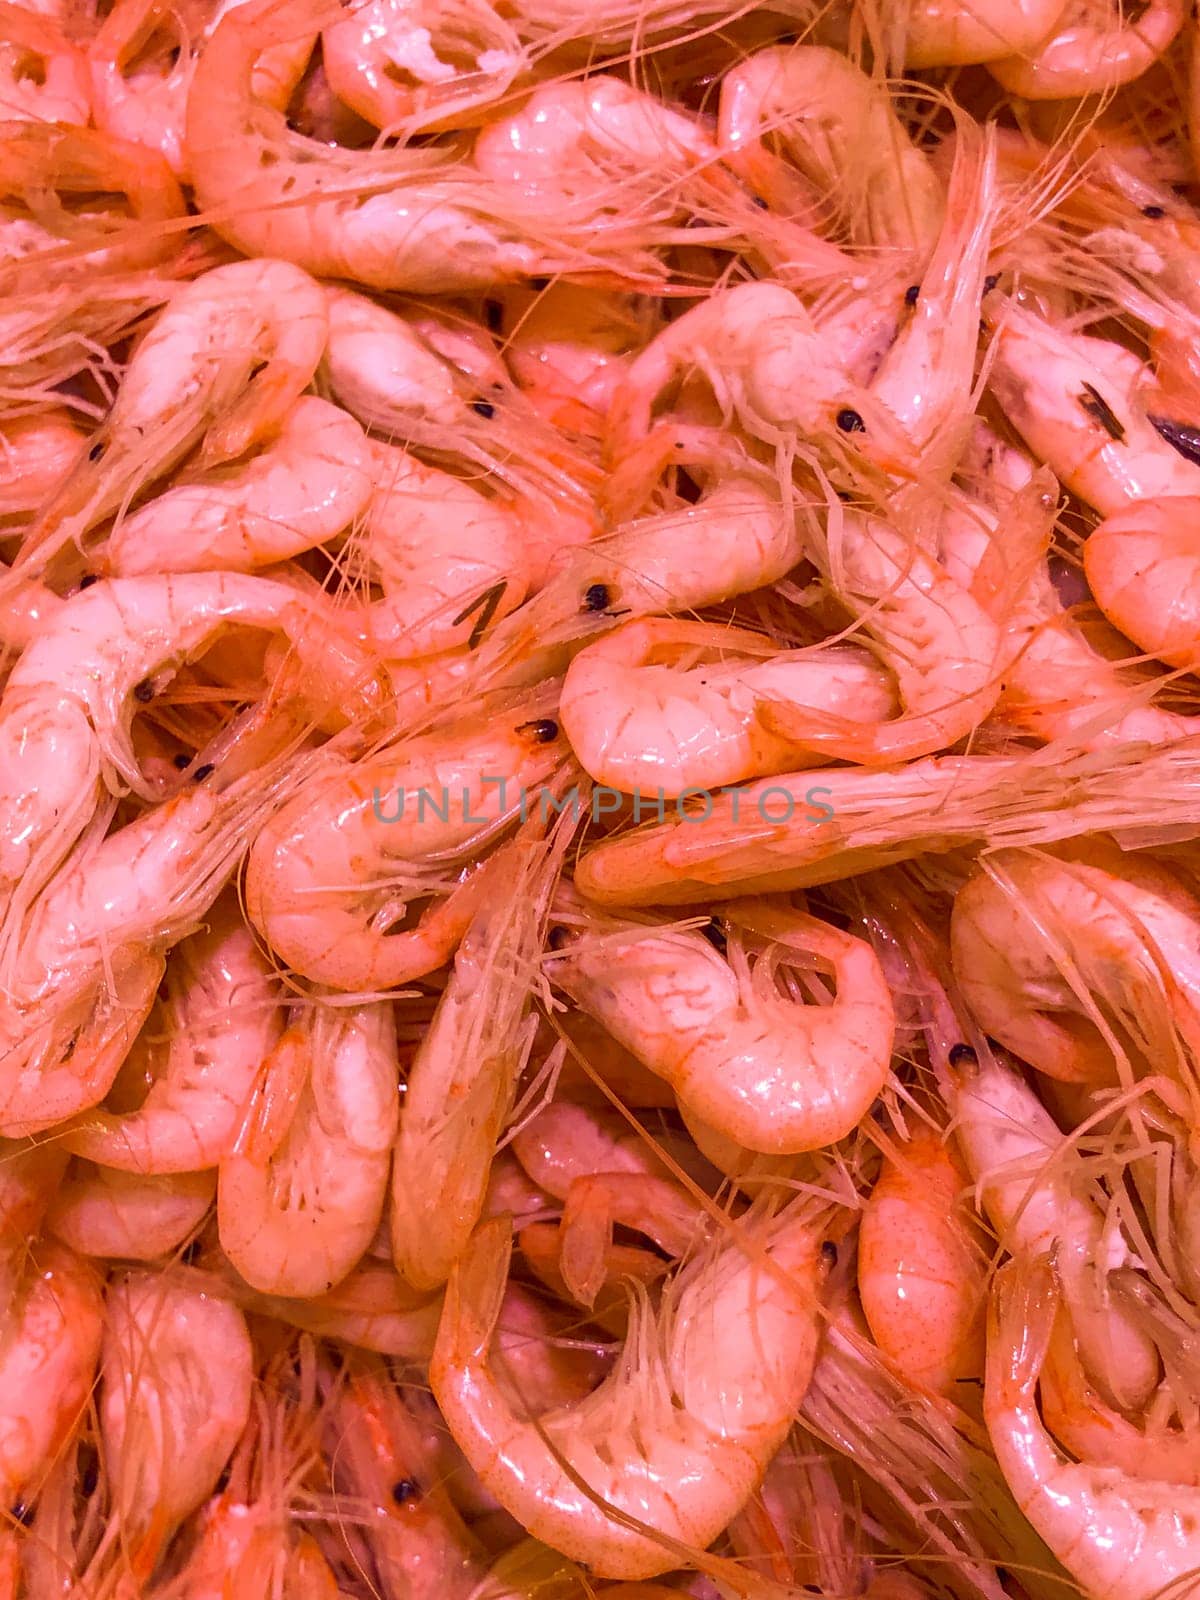 Fresh prawn shrimps on ice for sale at fish market by FreeProd